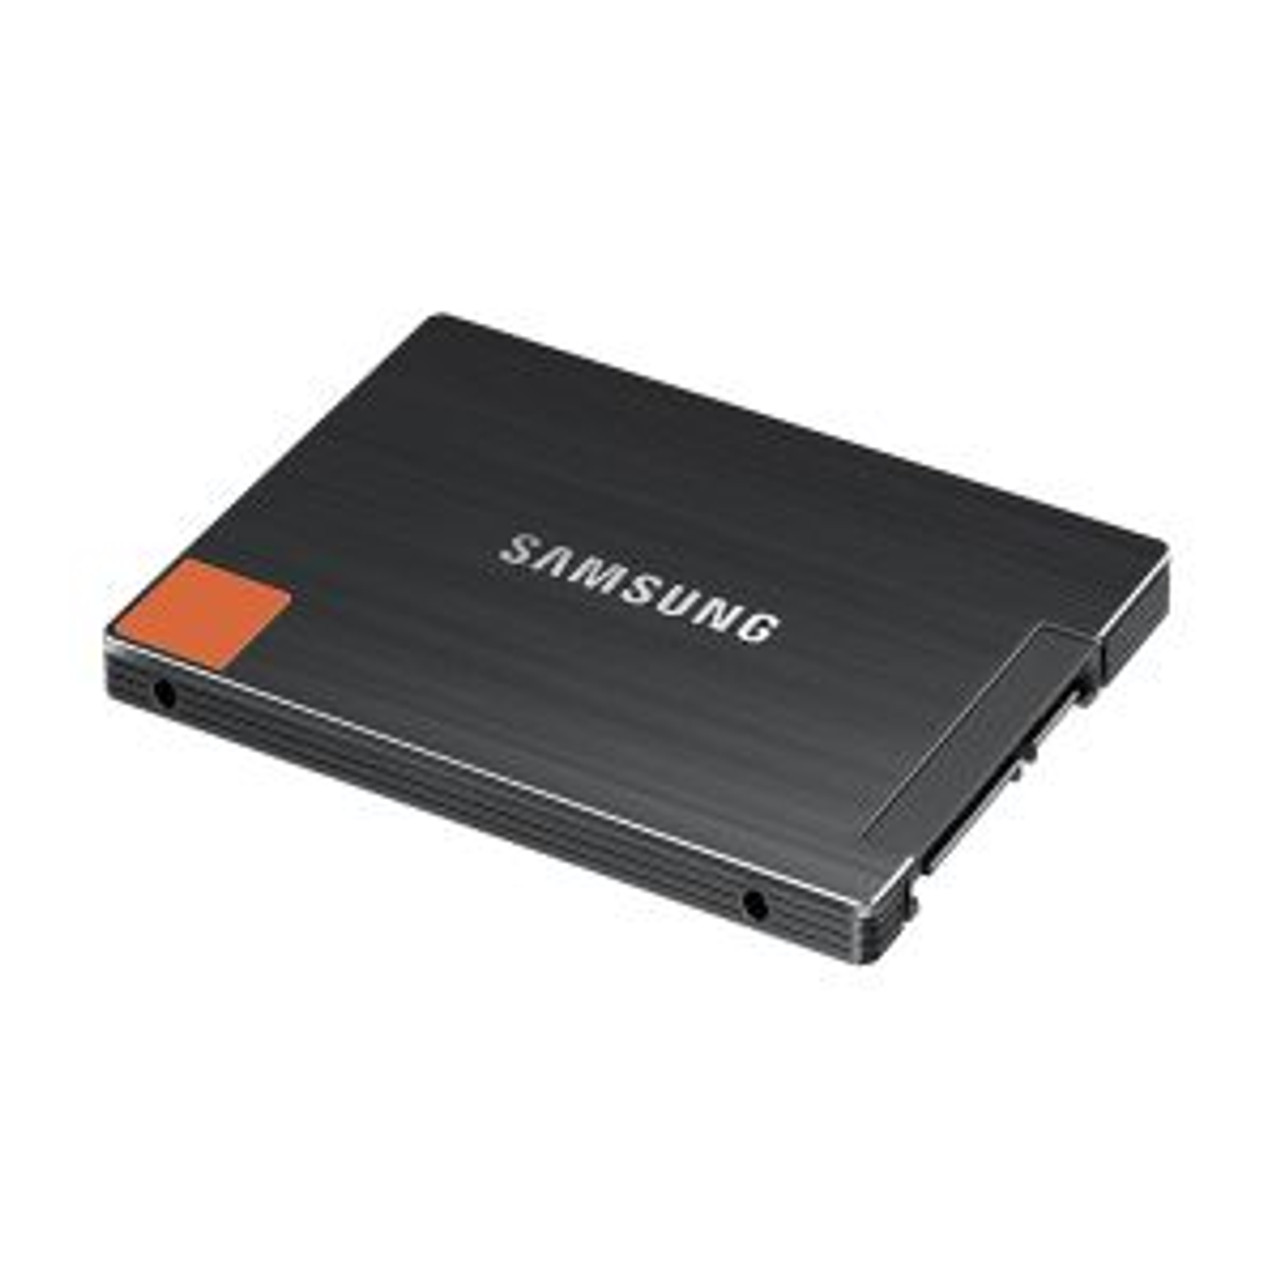 MZ-7PC256ZD | Samsung | 830 Series 256GB MLC SATA 6Gb/s 2.5-inch Solid State Drive (SSD)